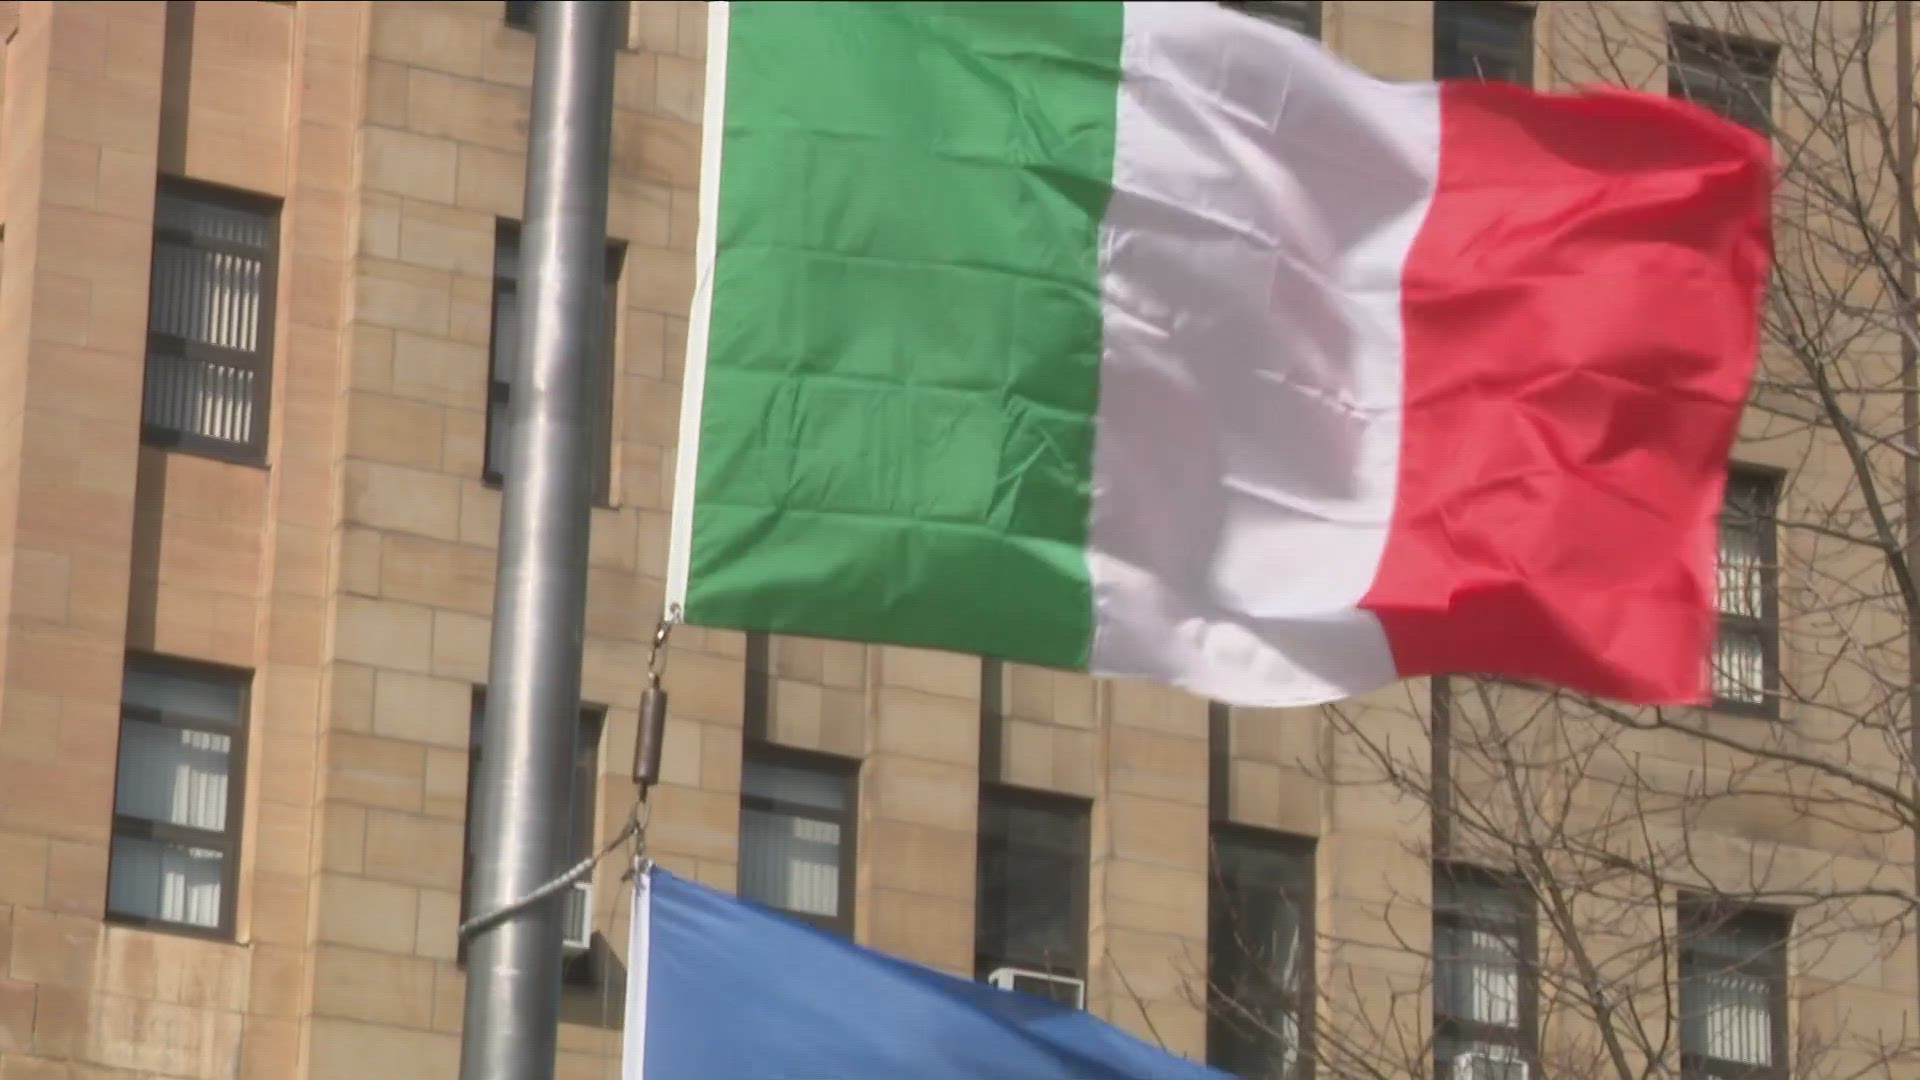 Irish flag raising today in Niagara Square kicks off St. Patrick's Day festivities